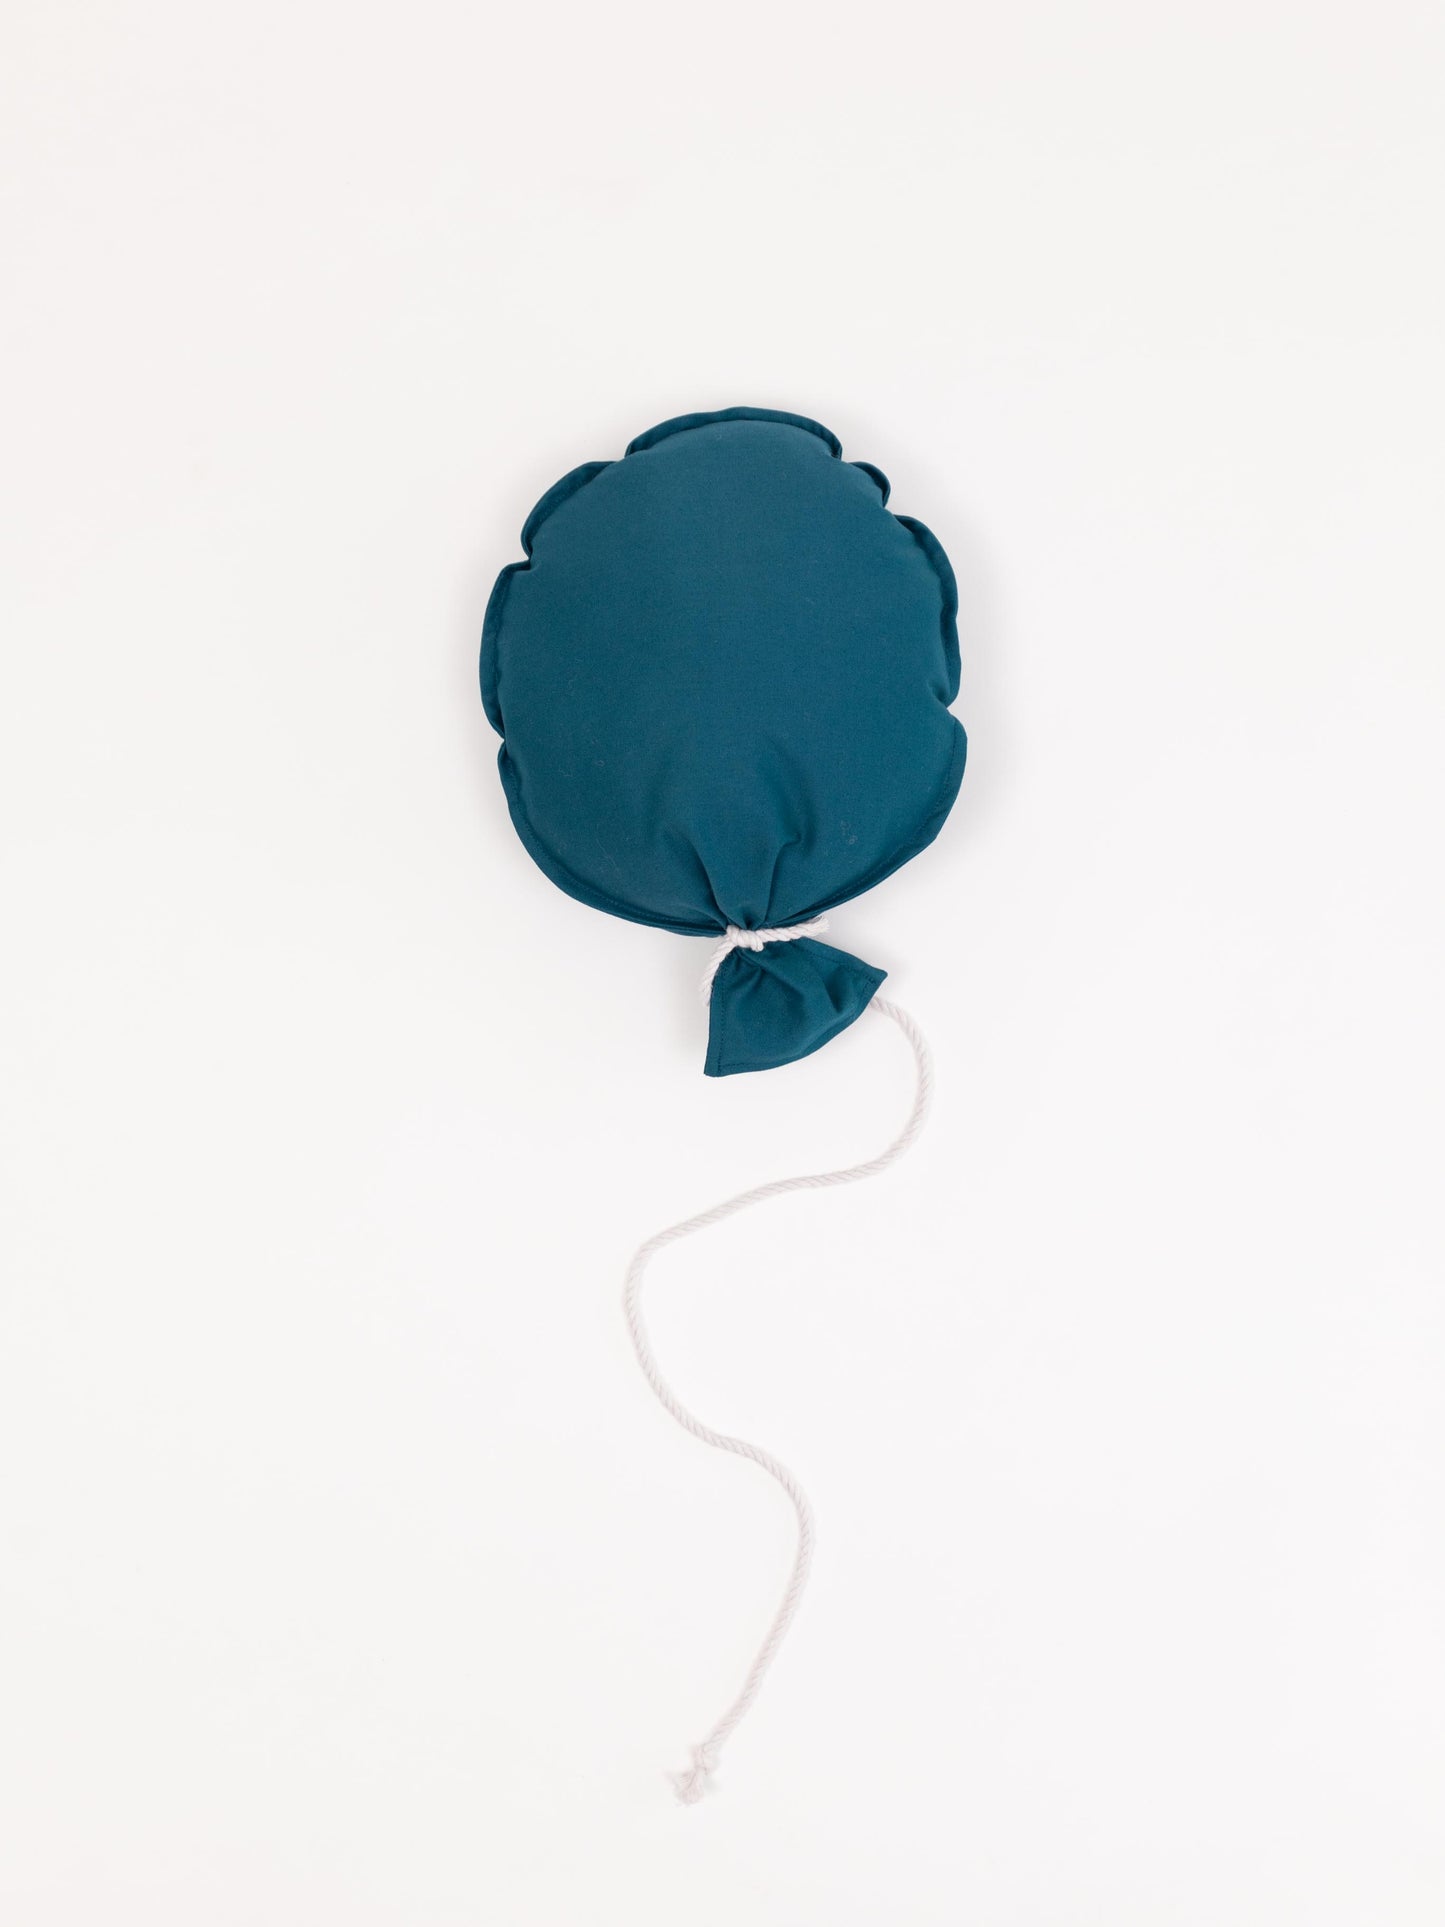 Kinderzimmer Wanddeko 'Luftballon' Dunkelblau handmade